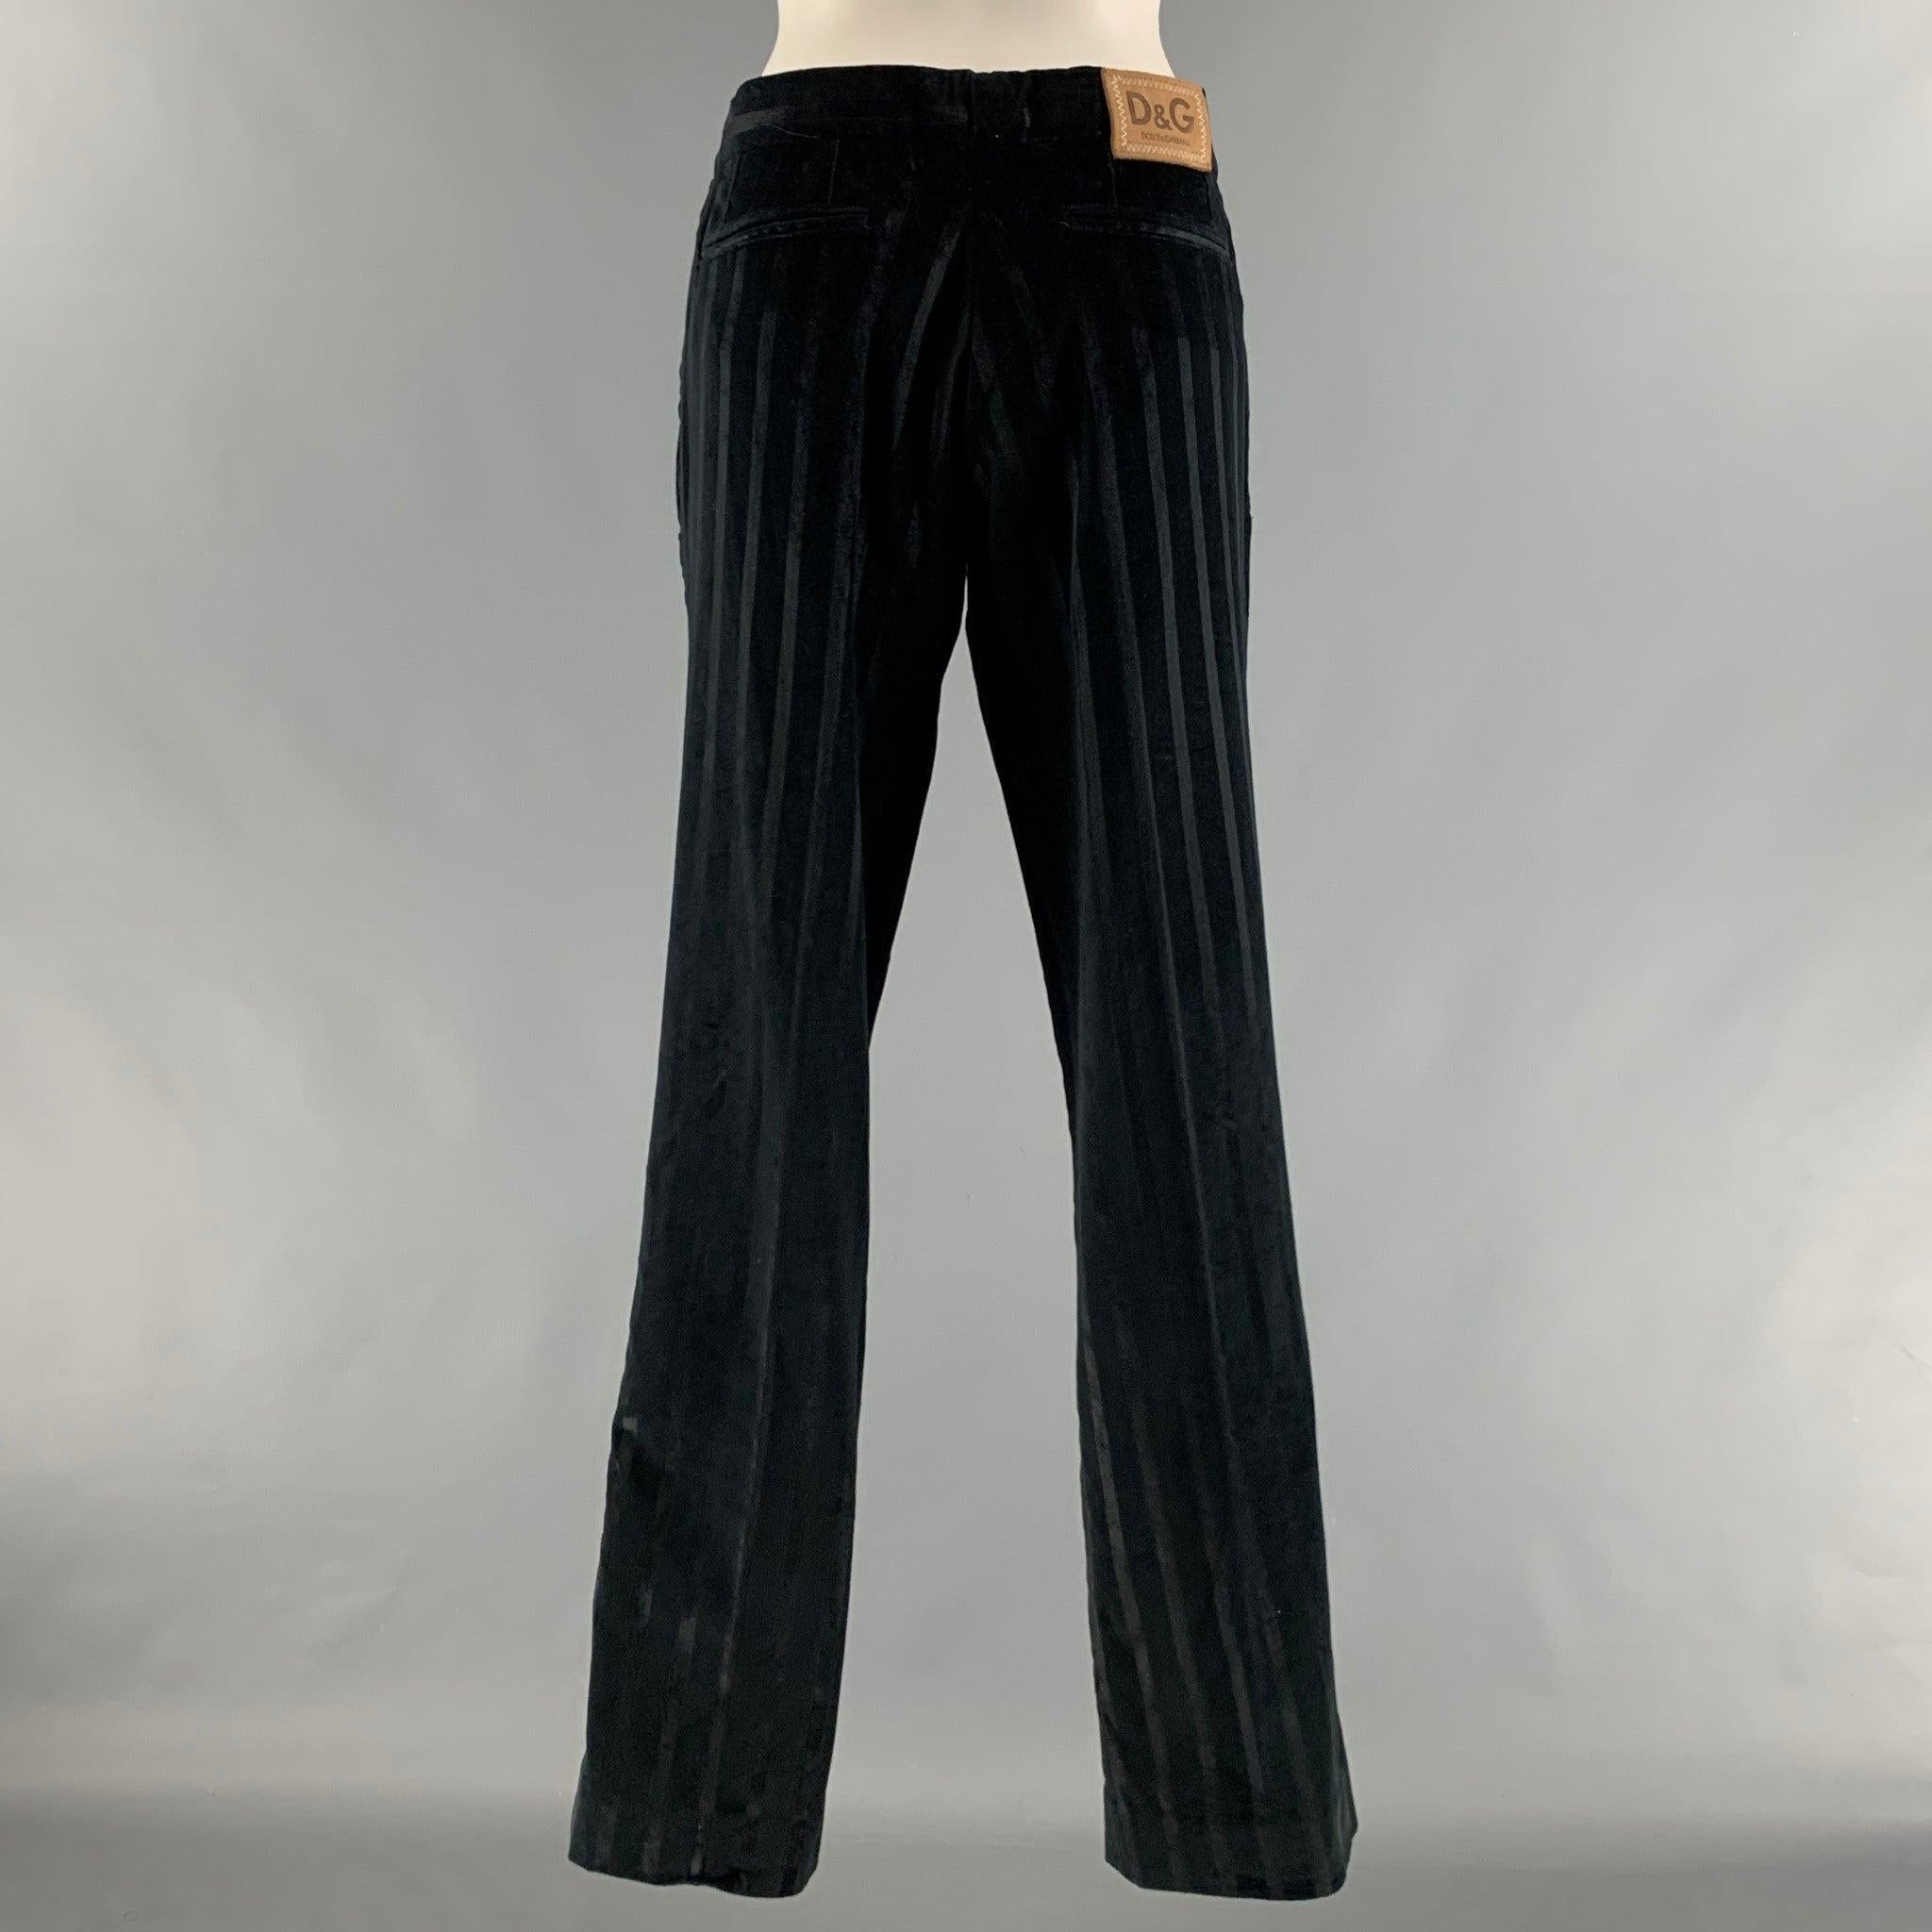 D&G by DOLCE & GABBANA Size 34 Black Stripe Cotton Viscose Dress Pants For Sale 1